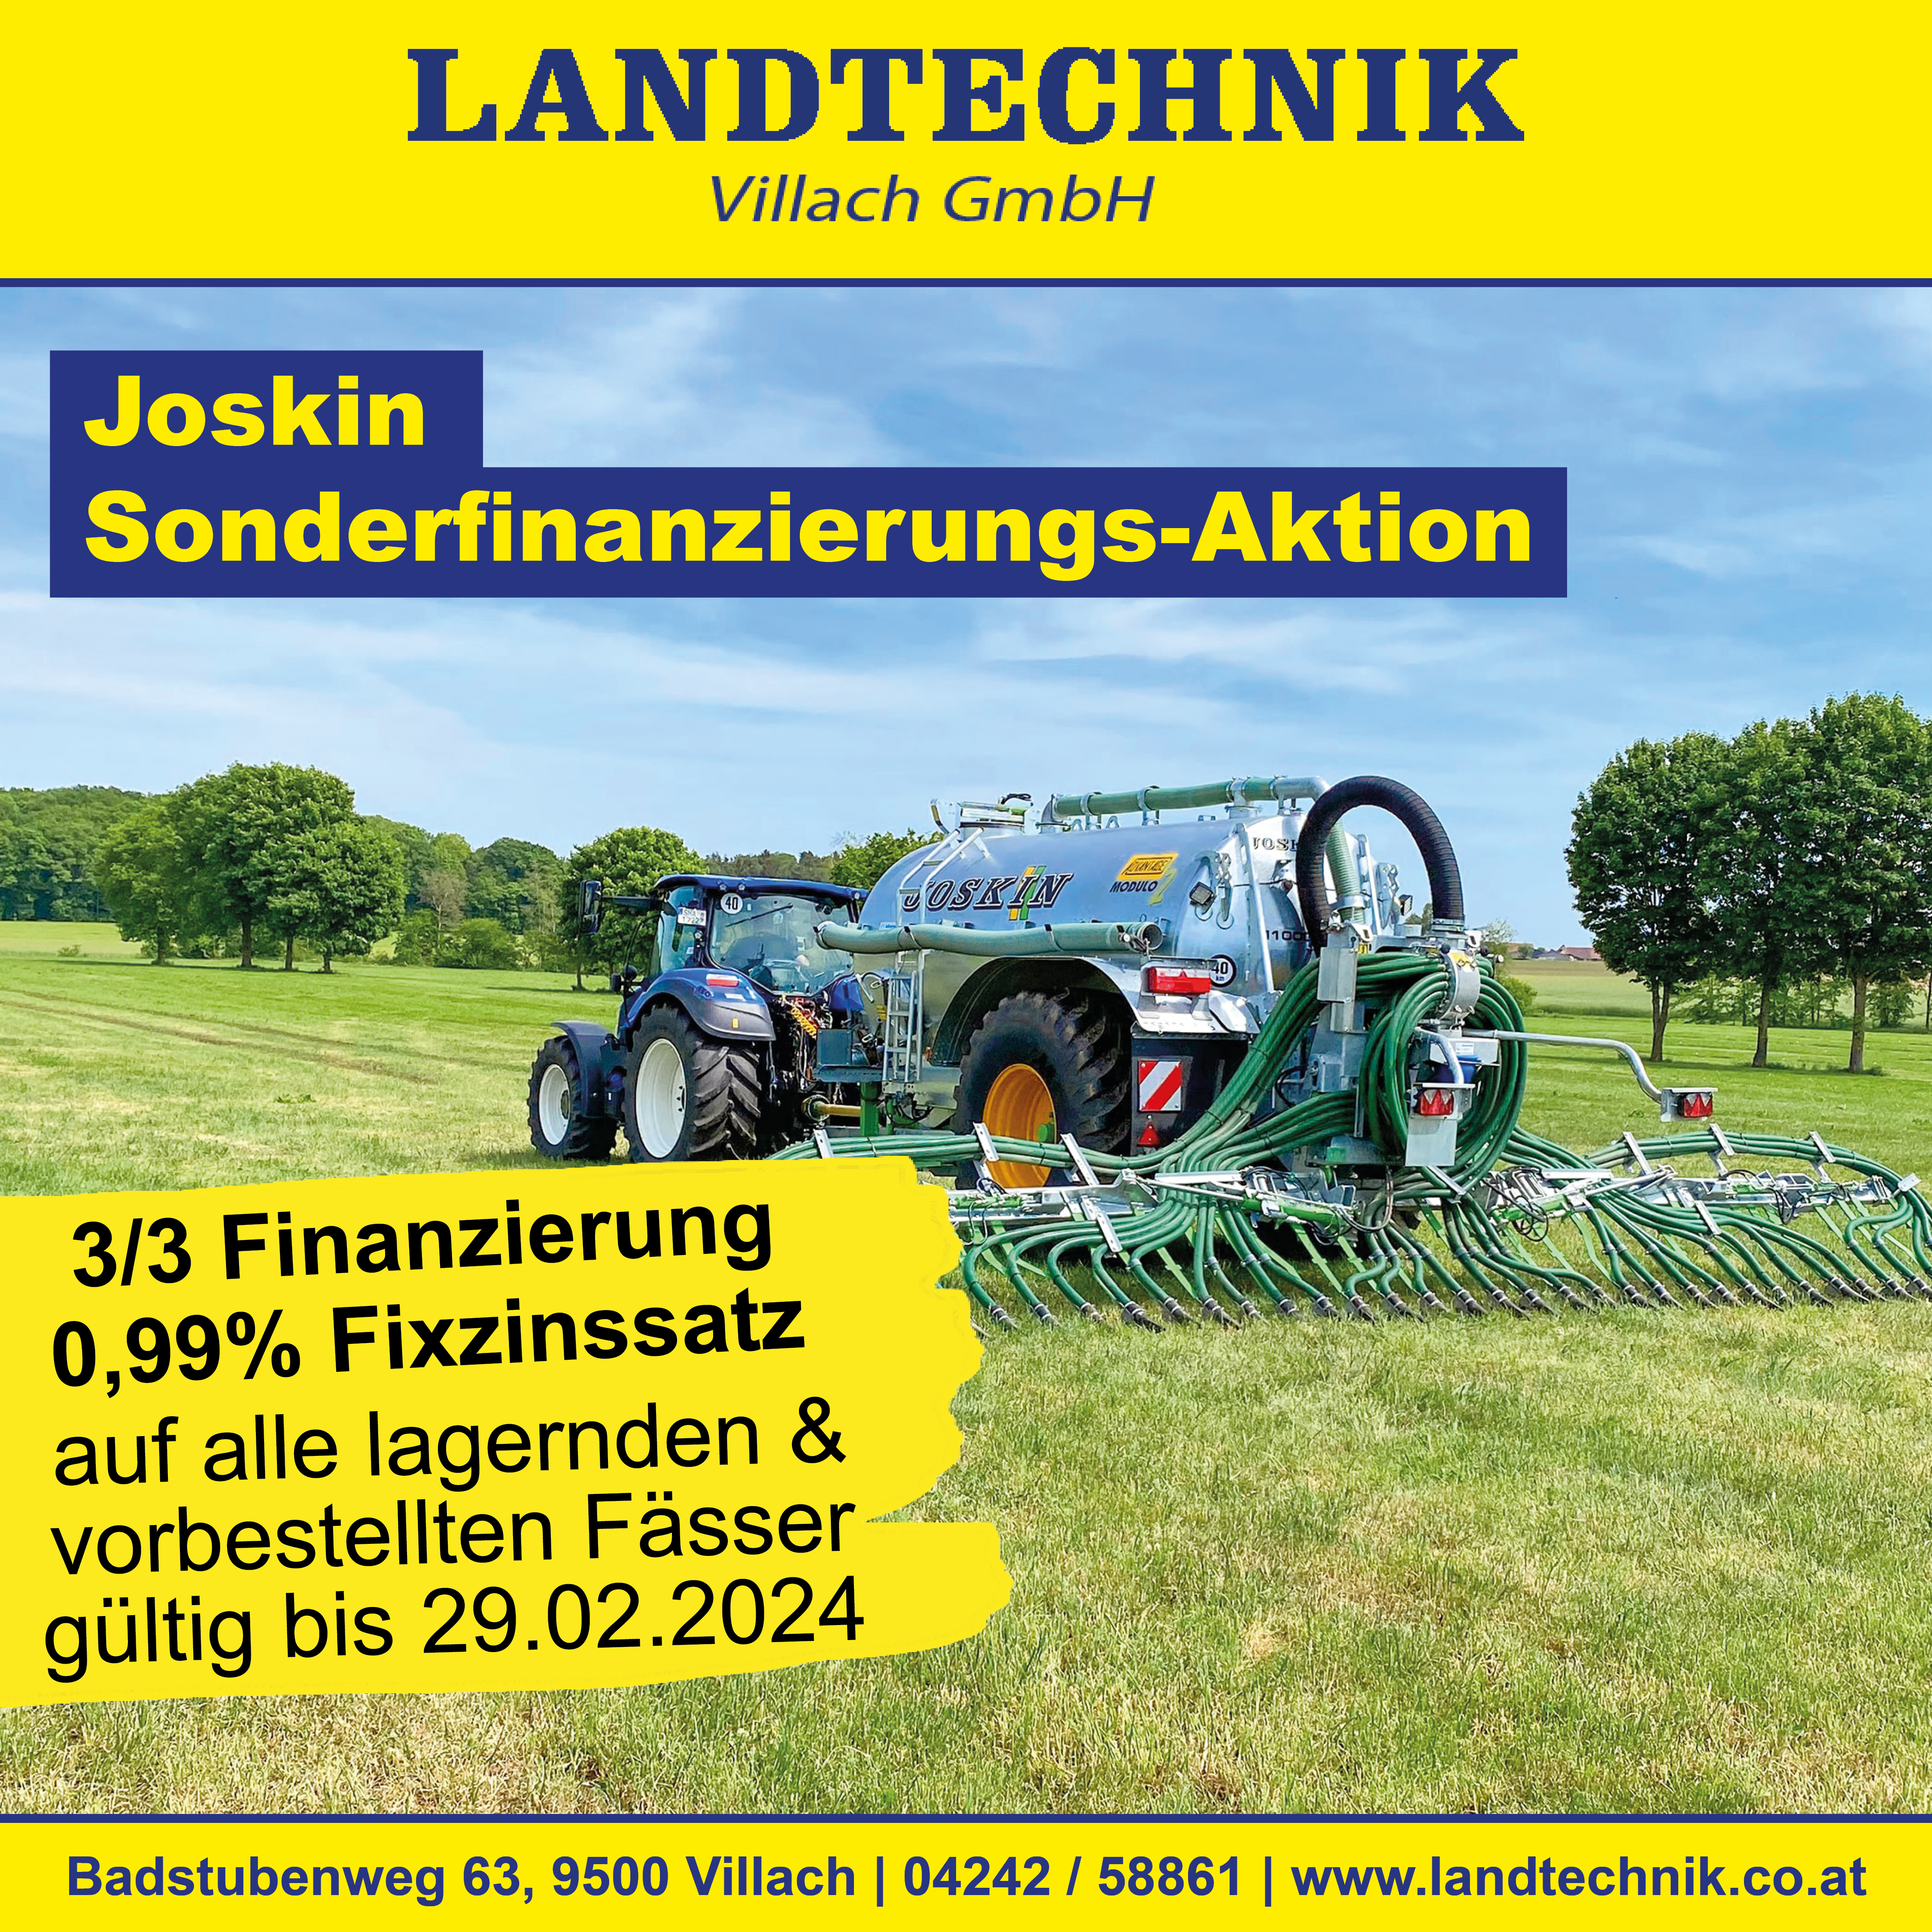 Husqvarna 555 RXT - Landtechnik Villach GmbH 